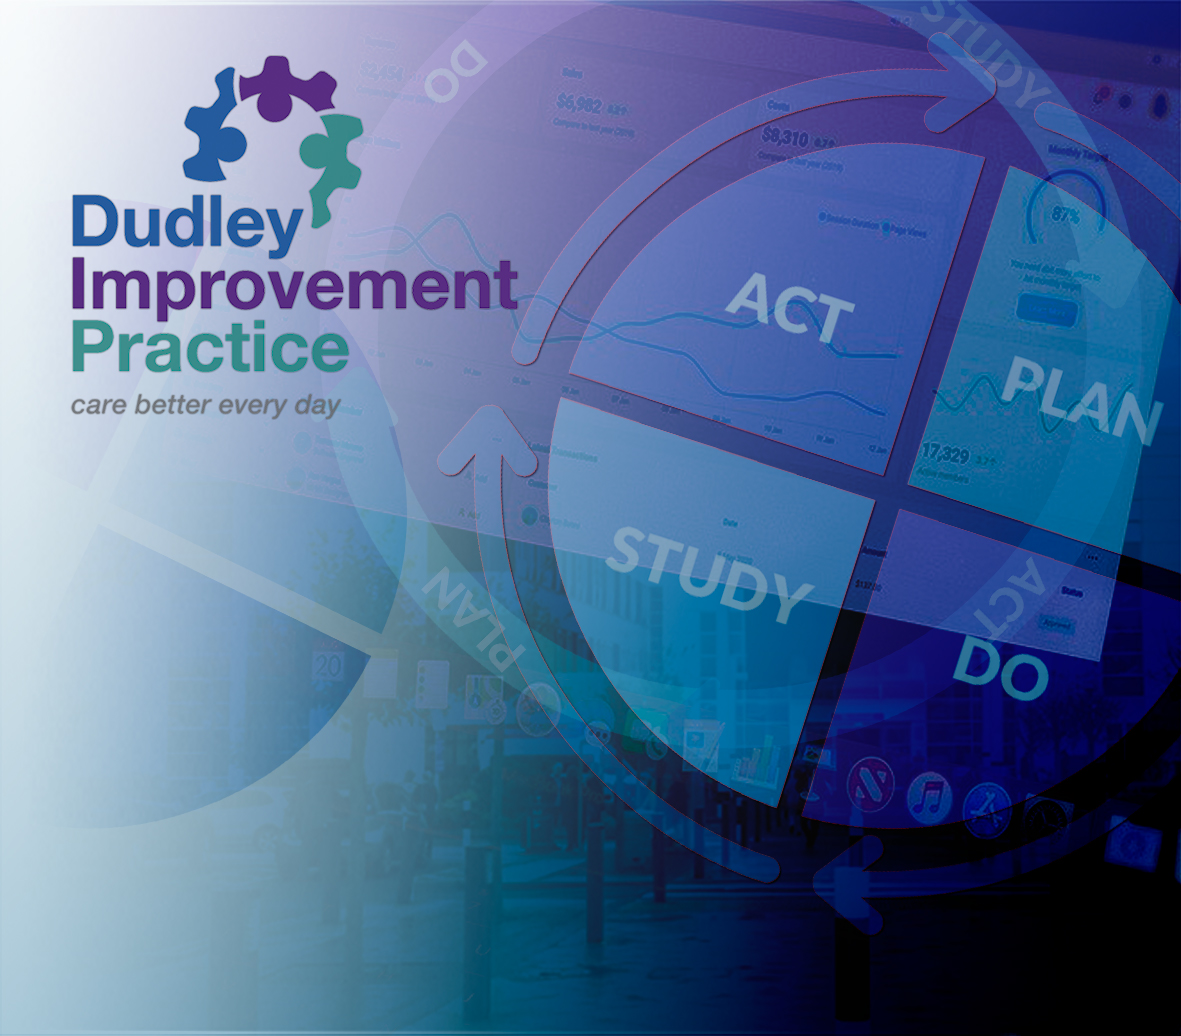 Dudley Improvement Practice resources marketing advert